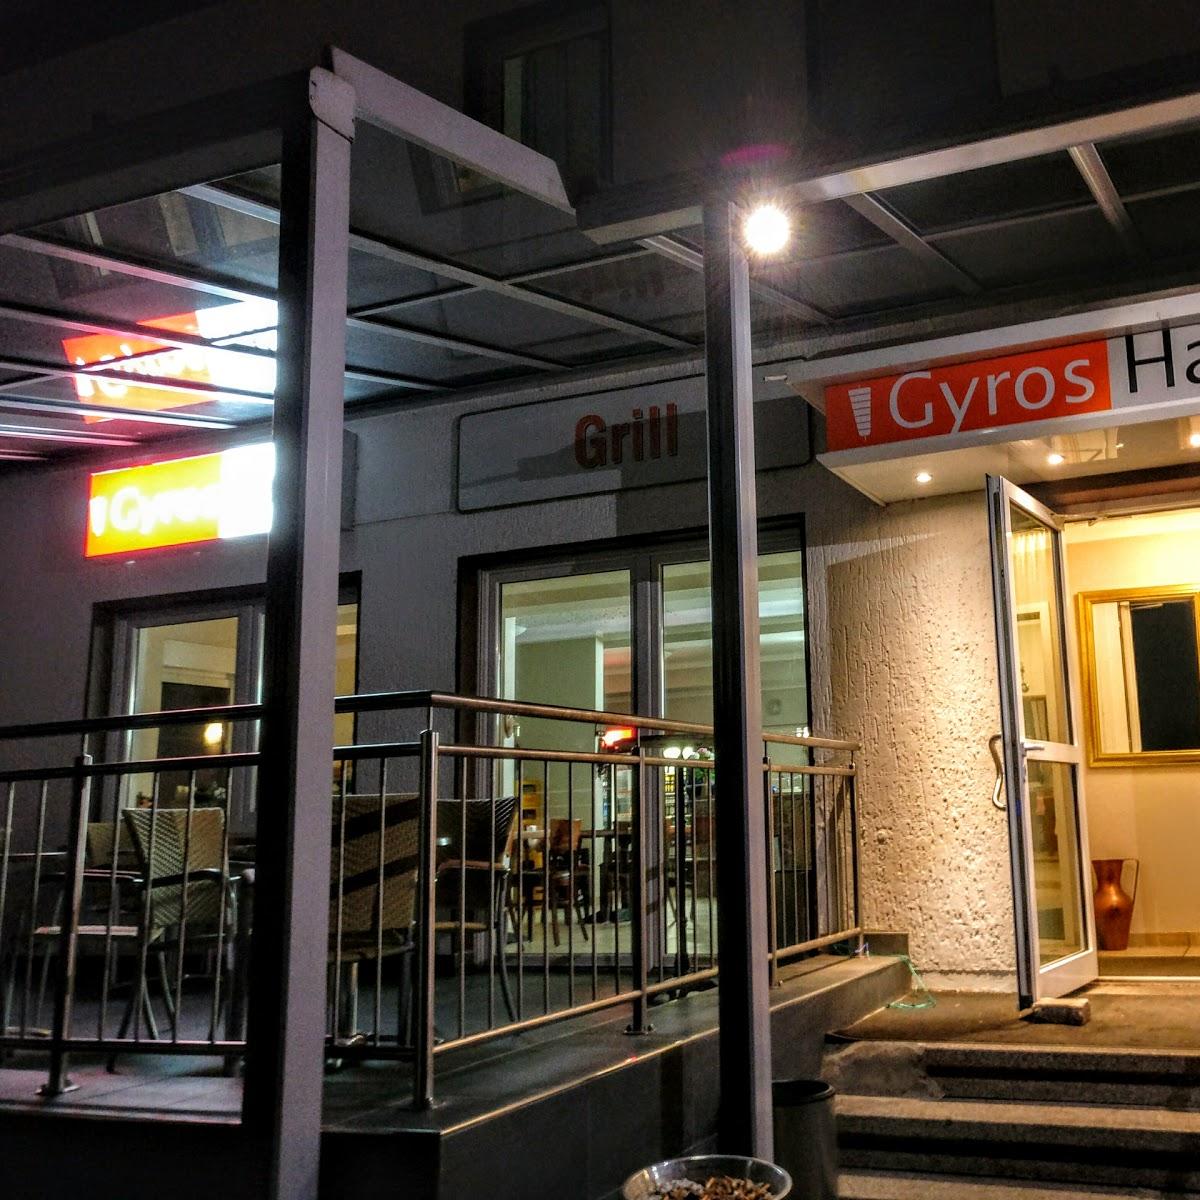 Restaurant "Gyros Haus" in Soest